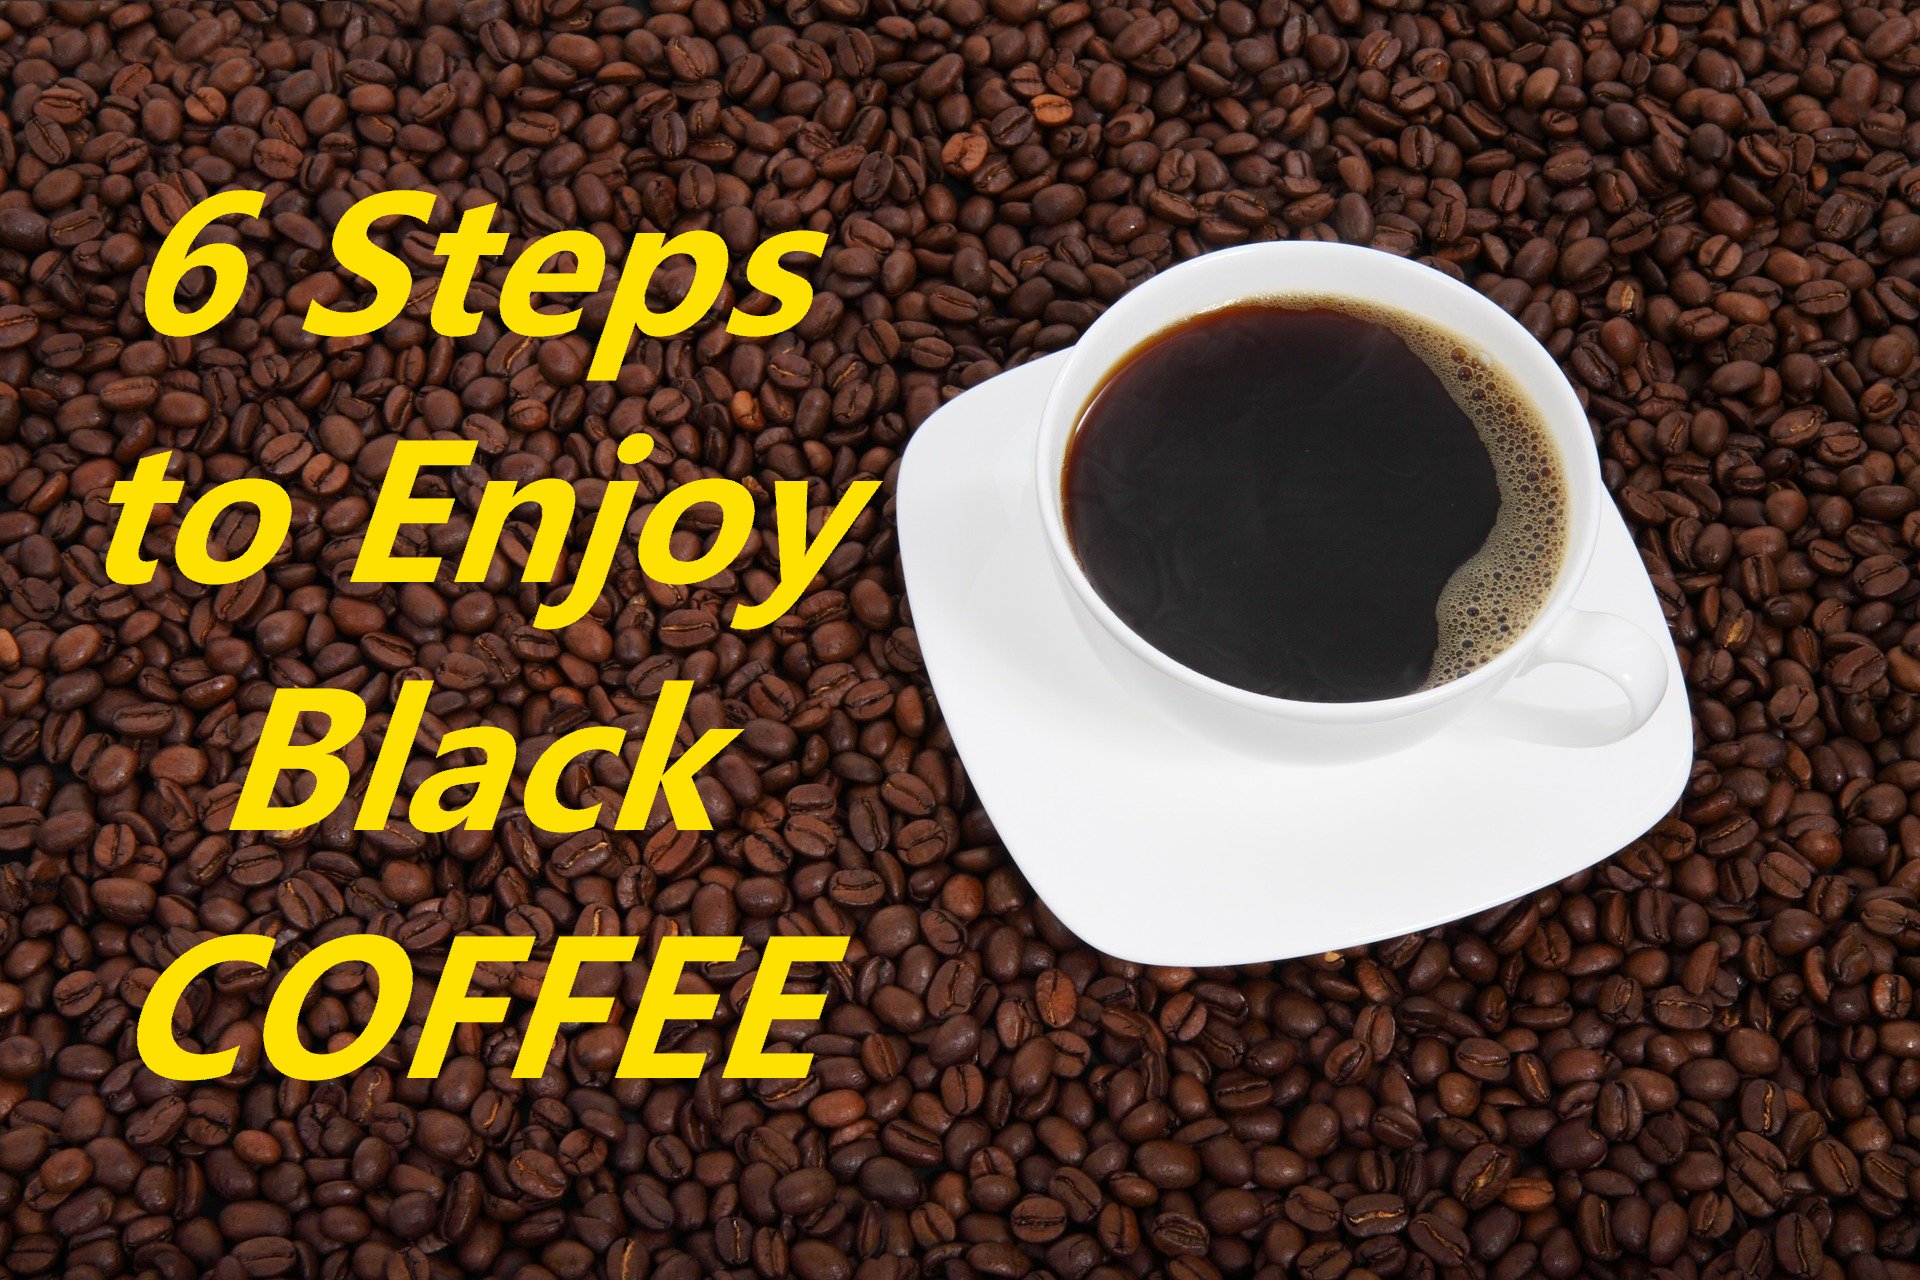 Enjoy Black Coffee